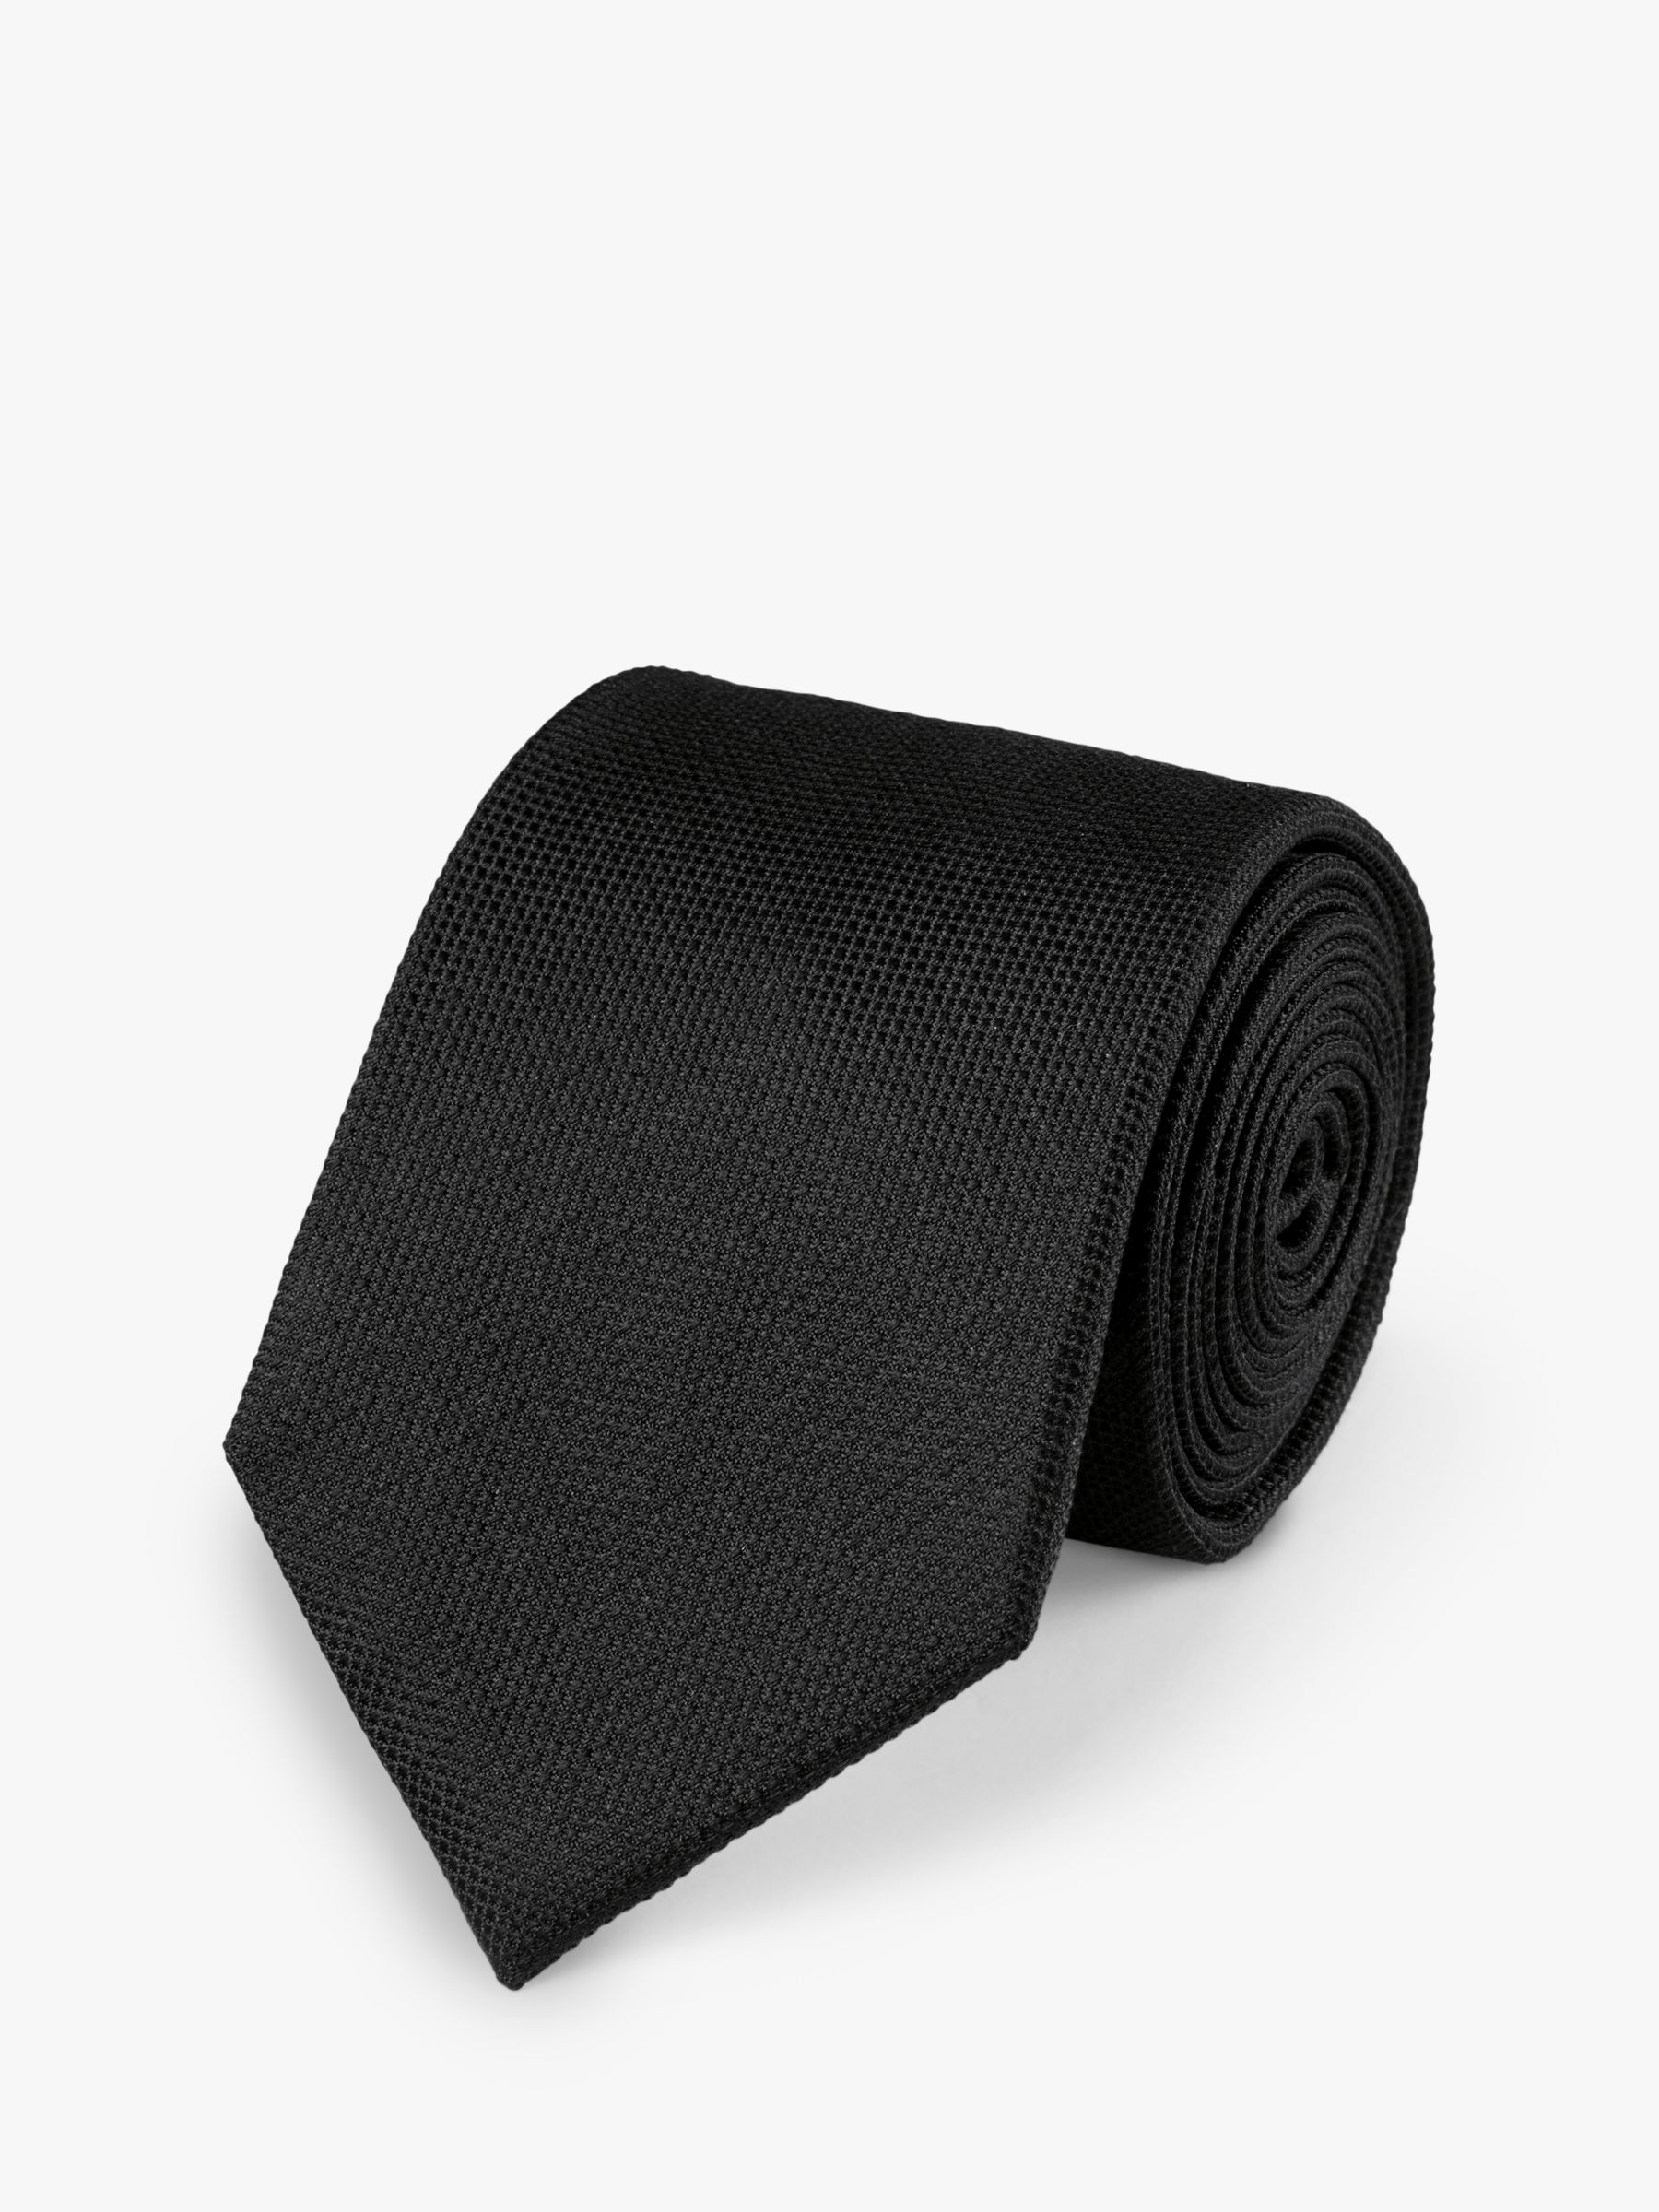 Charles Tyrwhitt Stain Resistant Silk Tie, Black at John Lewis & Partners